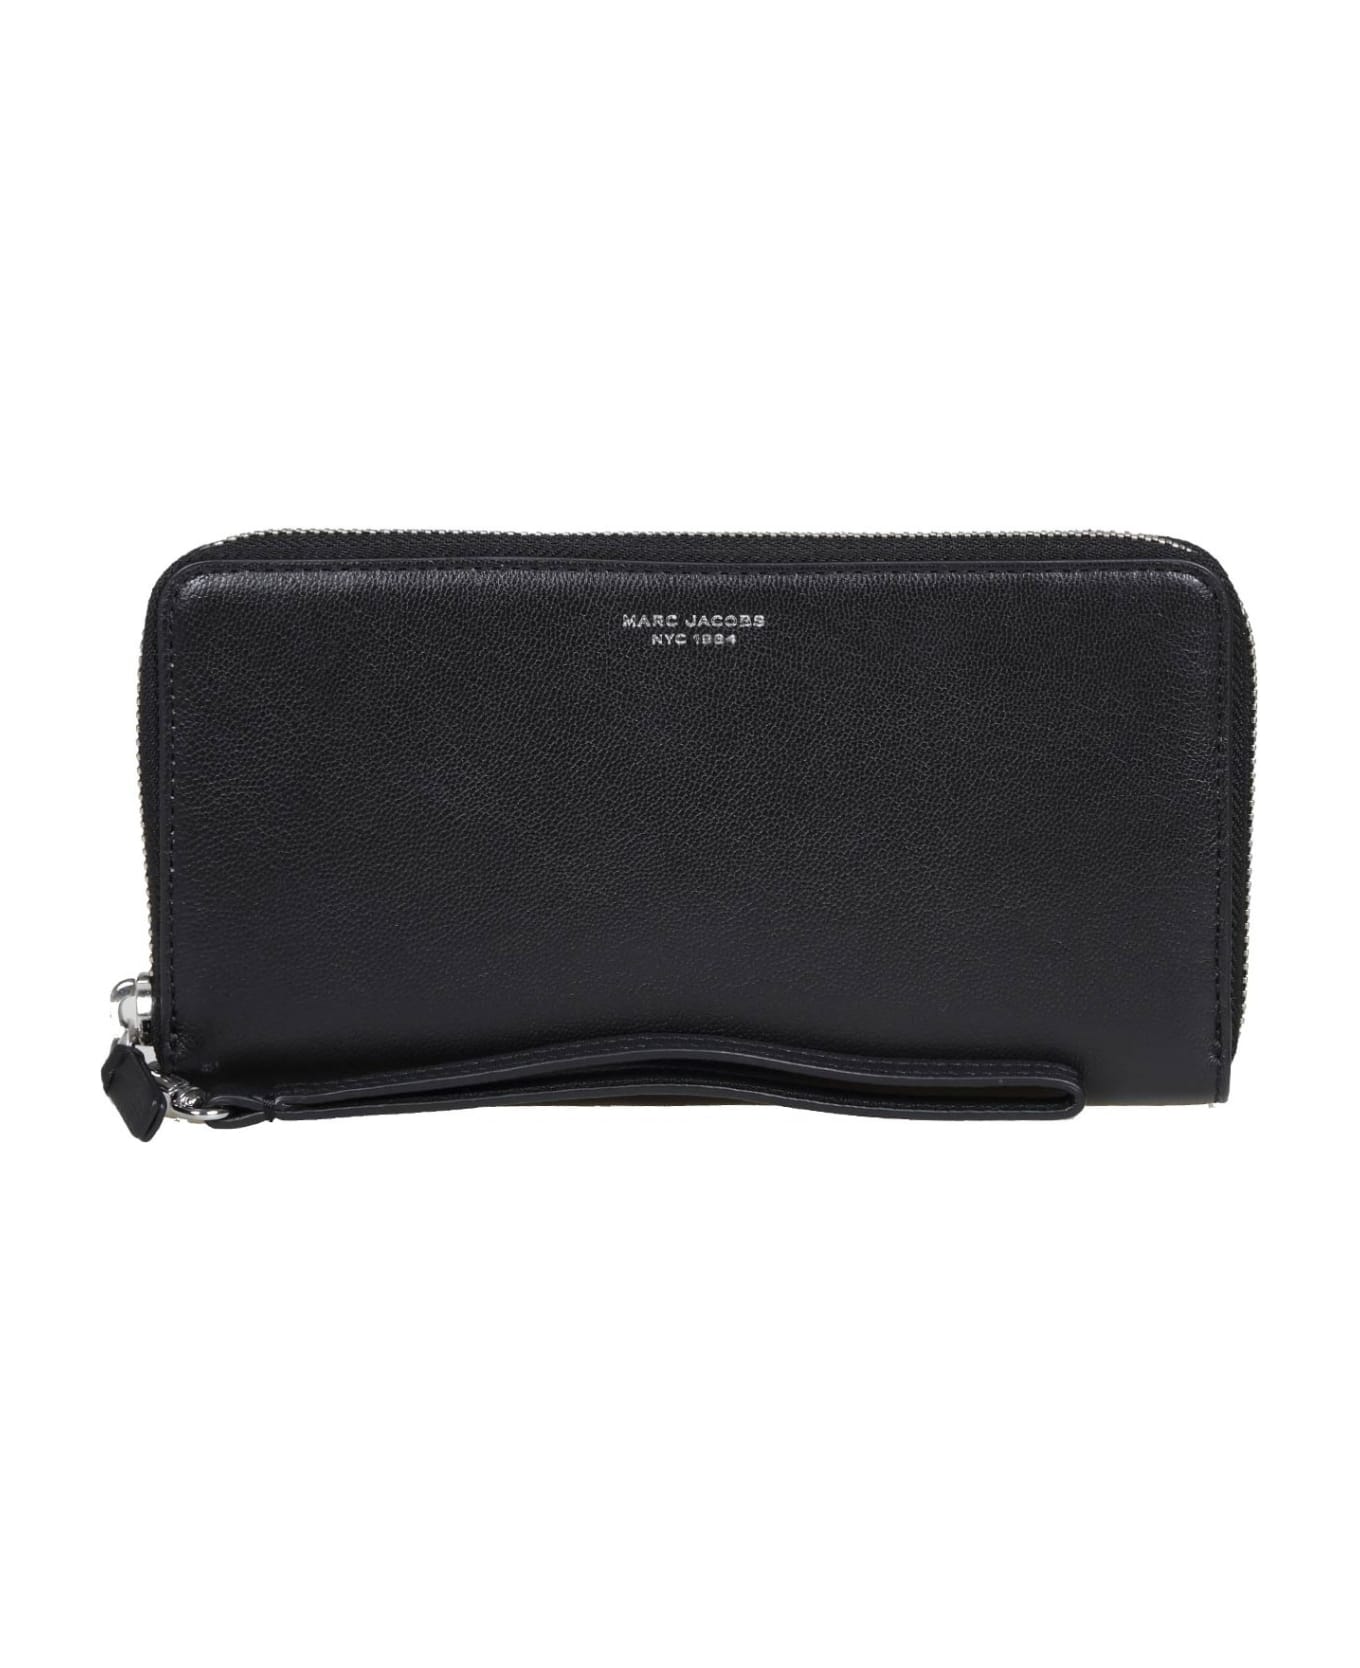 Marc Jacobs Wallet In Black Leather - Black